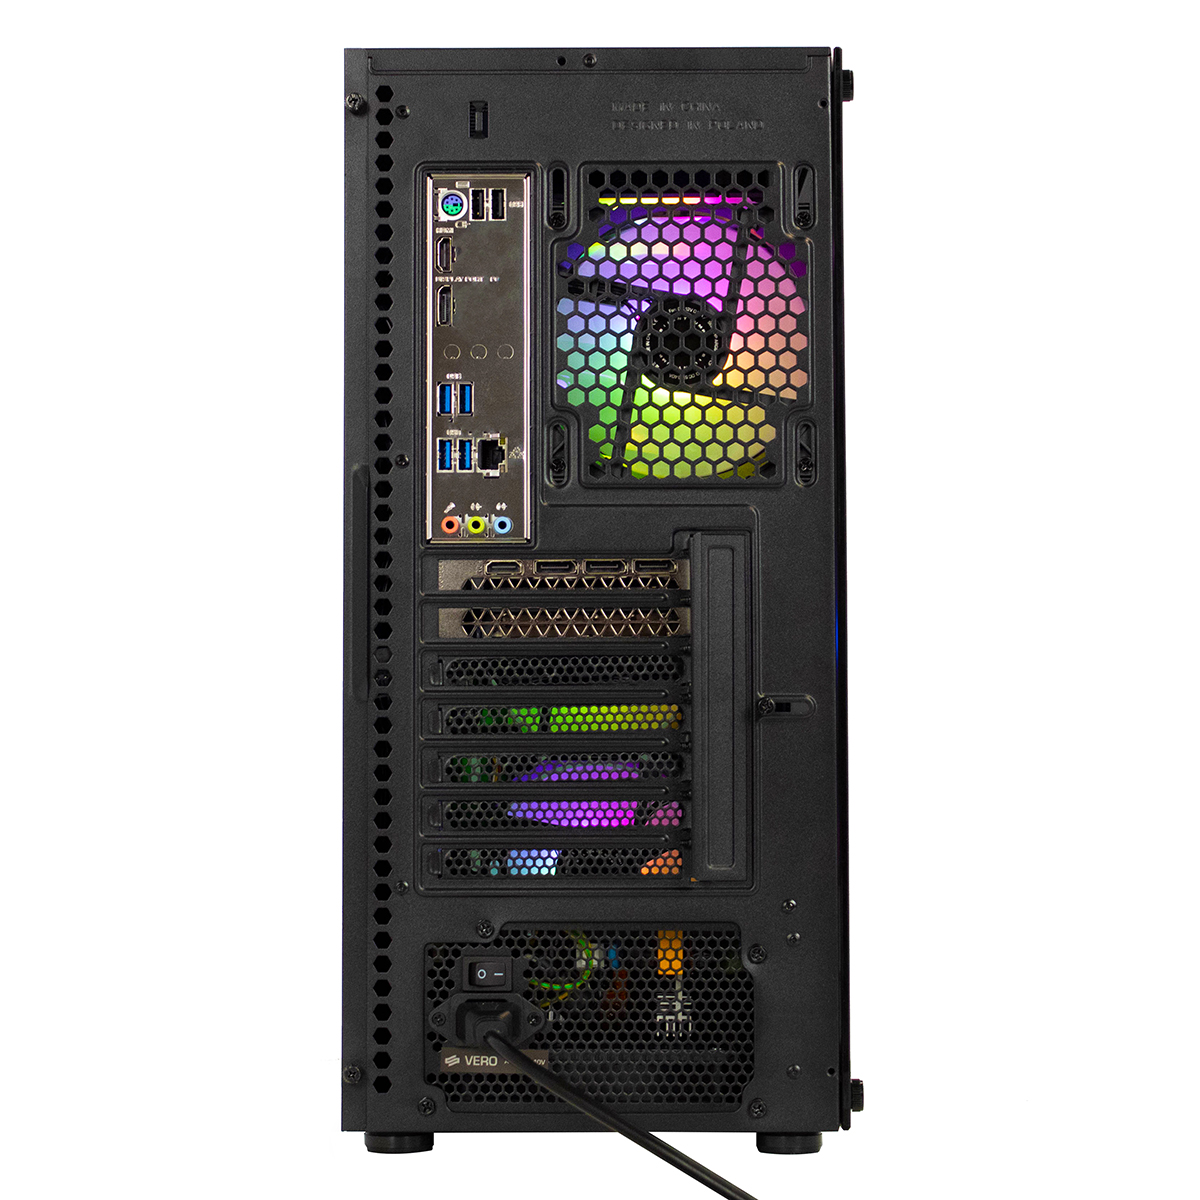 SCREENON T46187 -S2, Gaming RAM, GTX PC, SSD, GB GB 240 GeForce 16 NVIDIA 1650